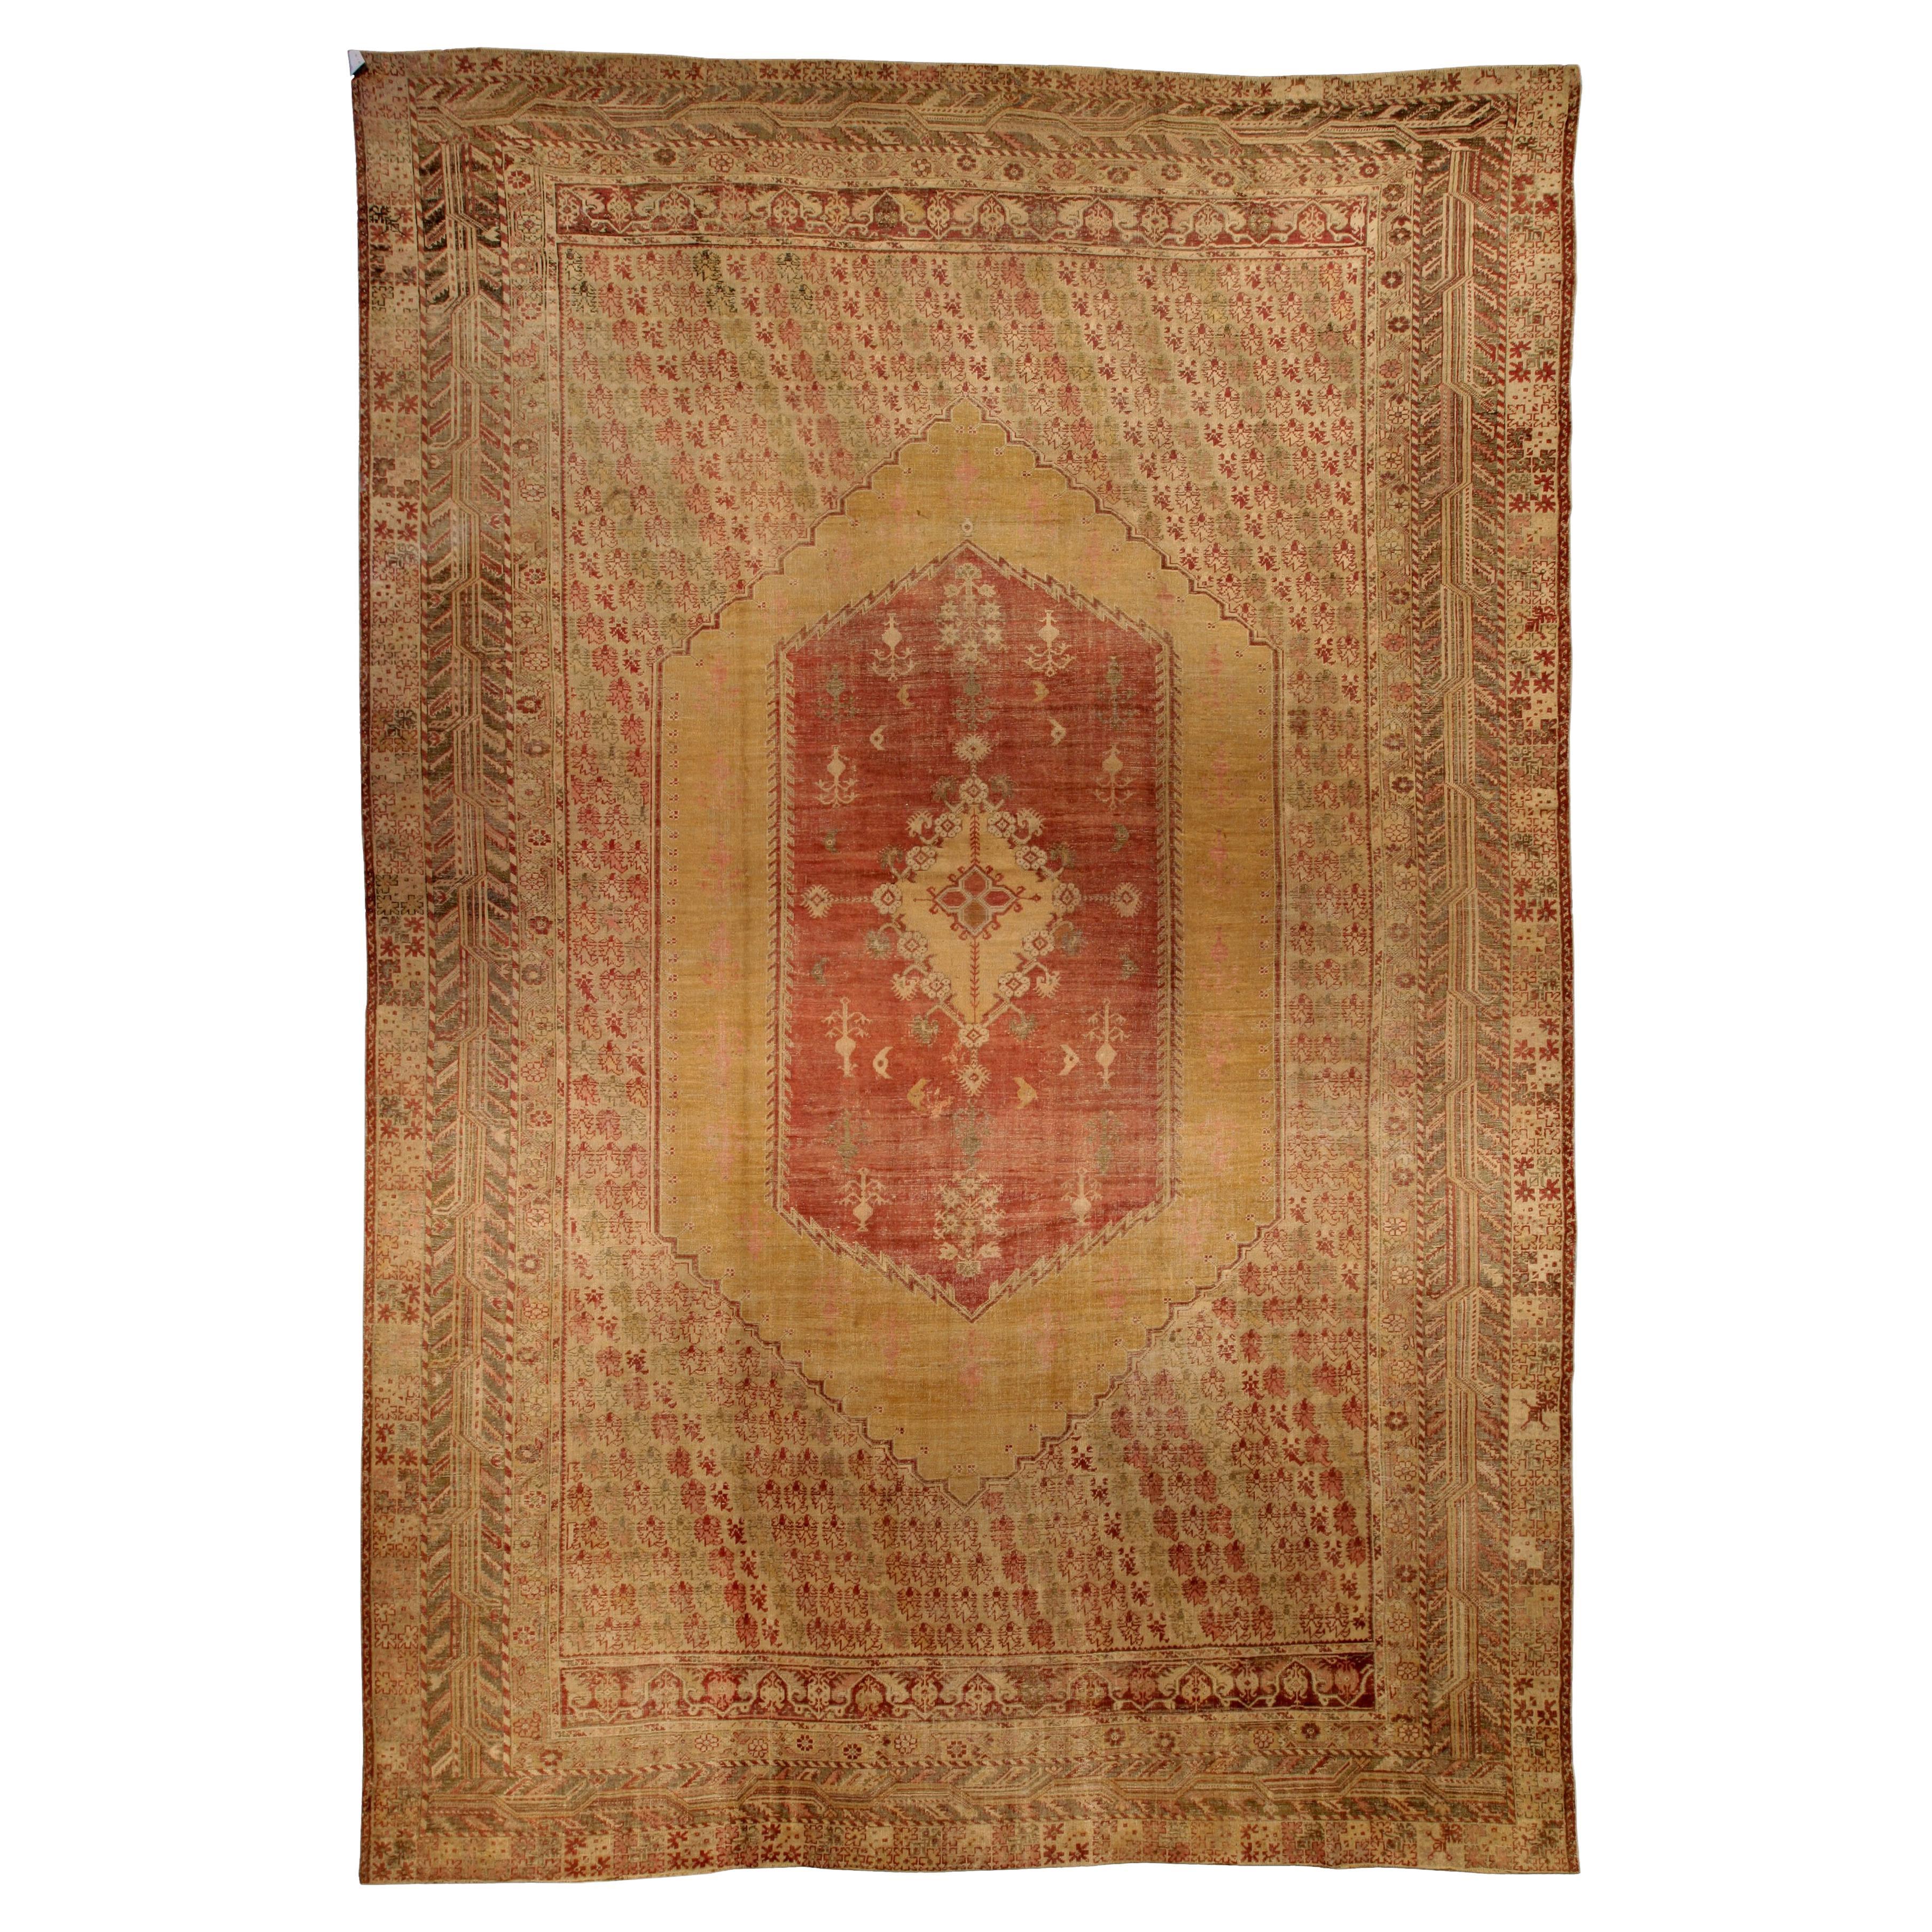 Authentic 19th Century Red Turkish Ghiordes Rug